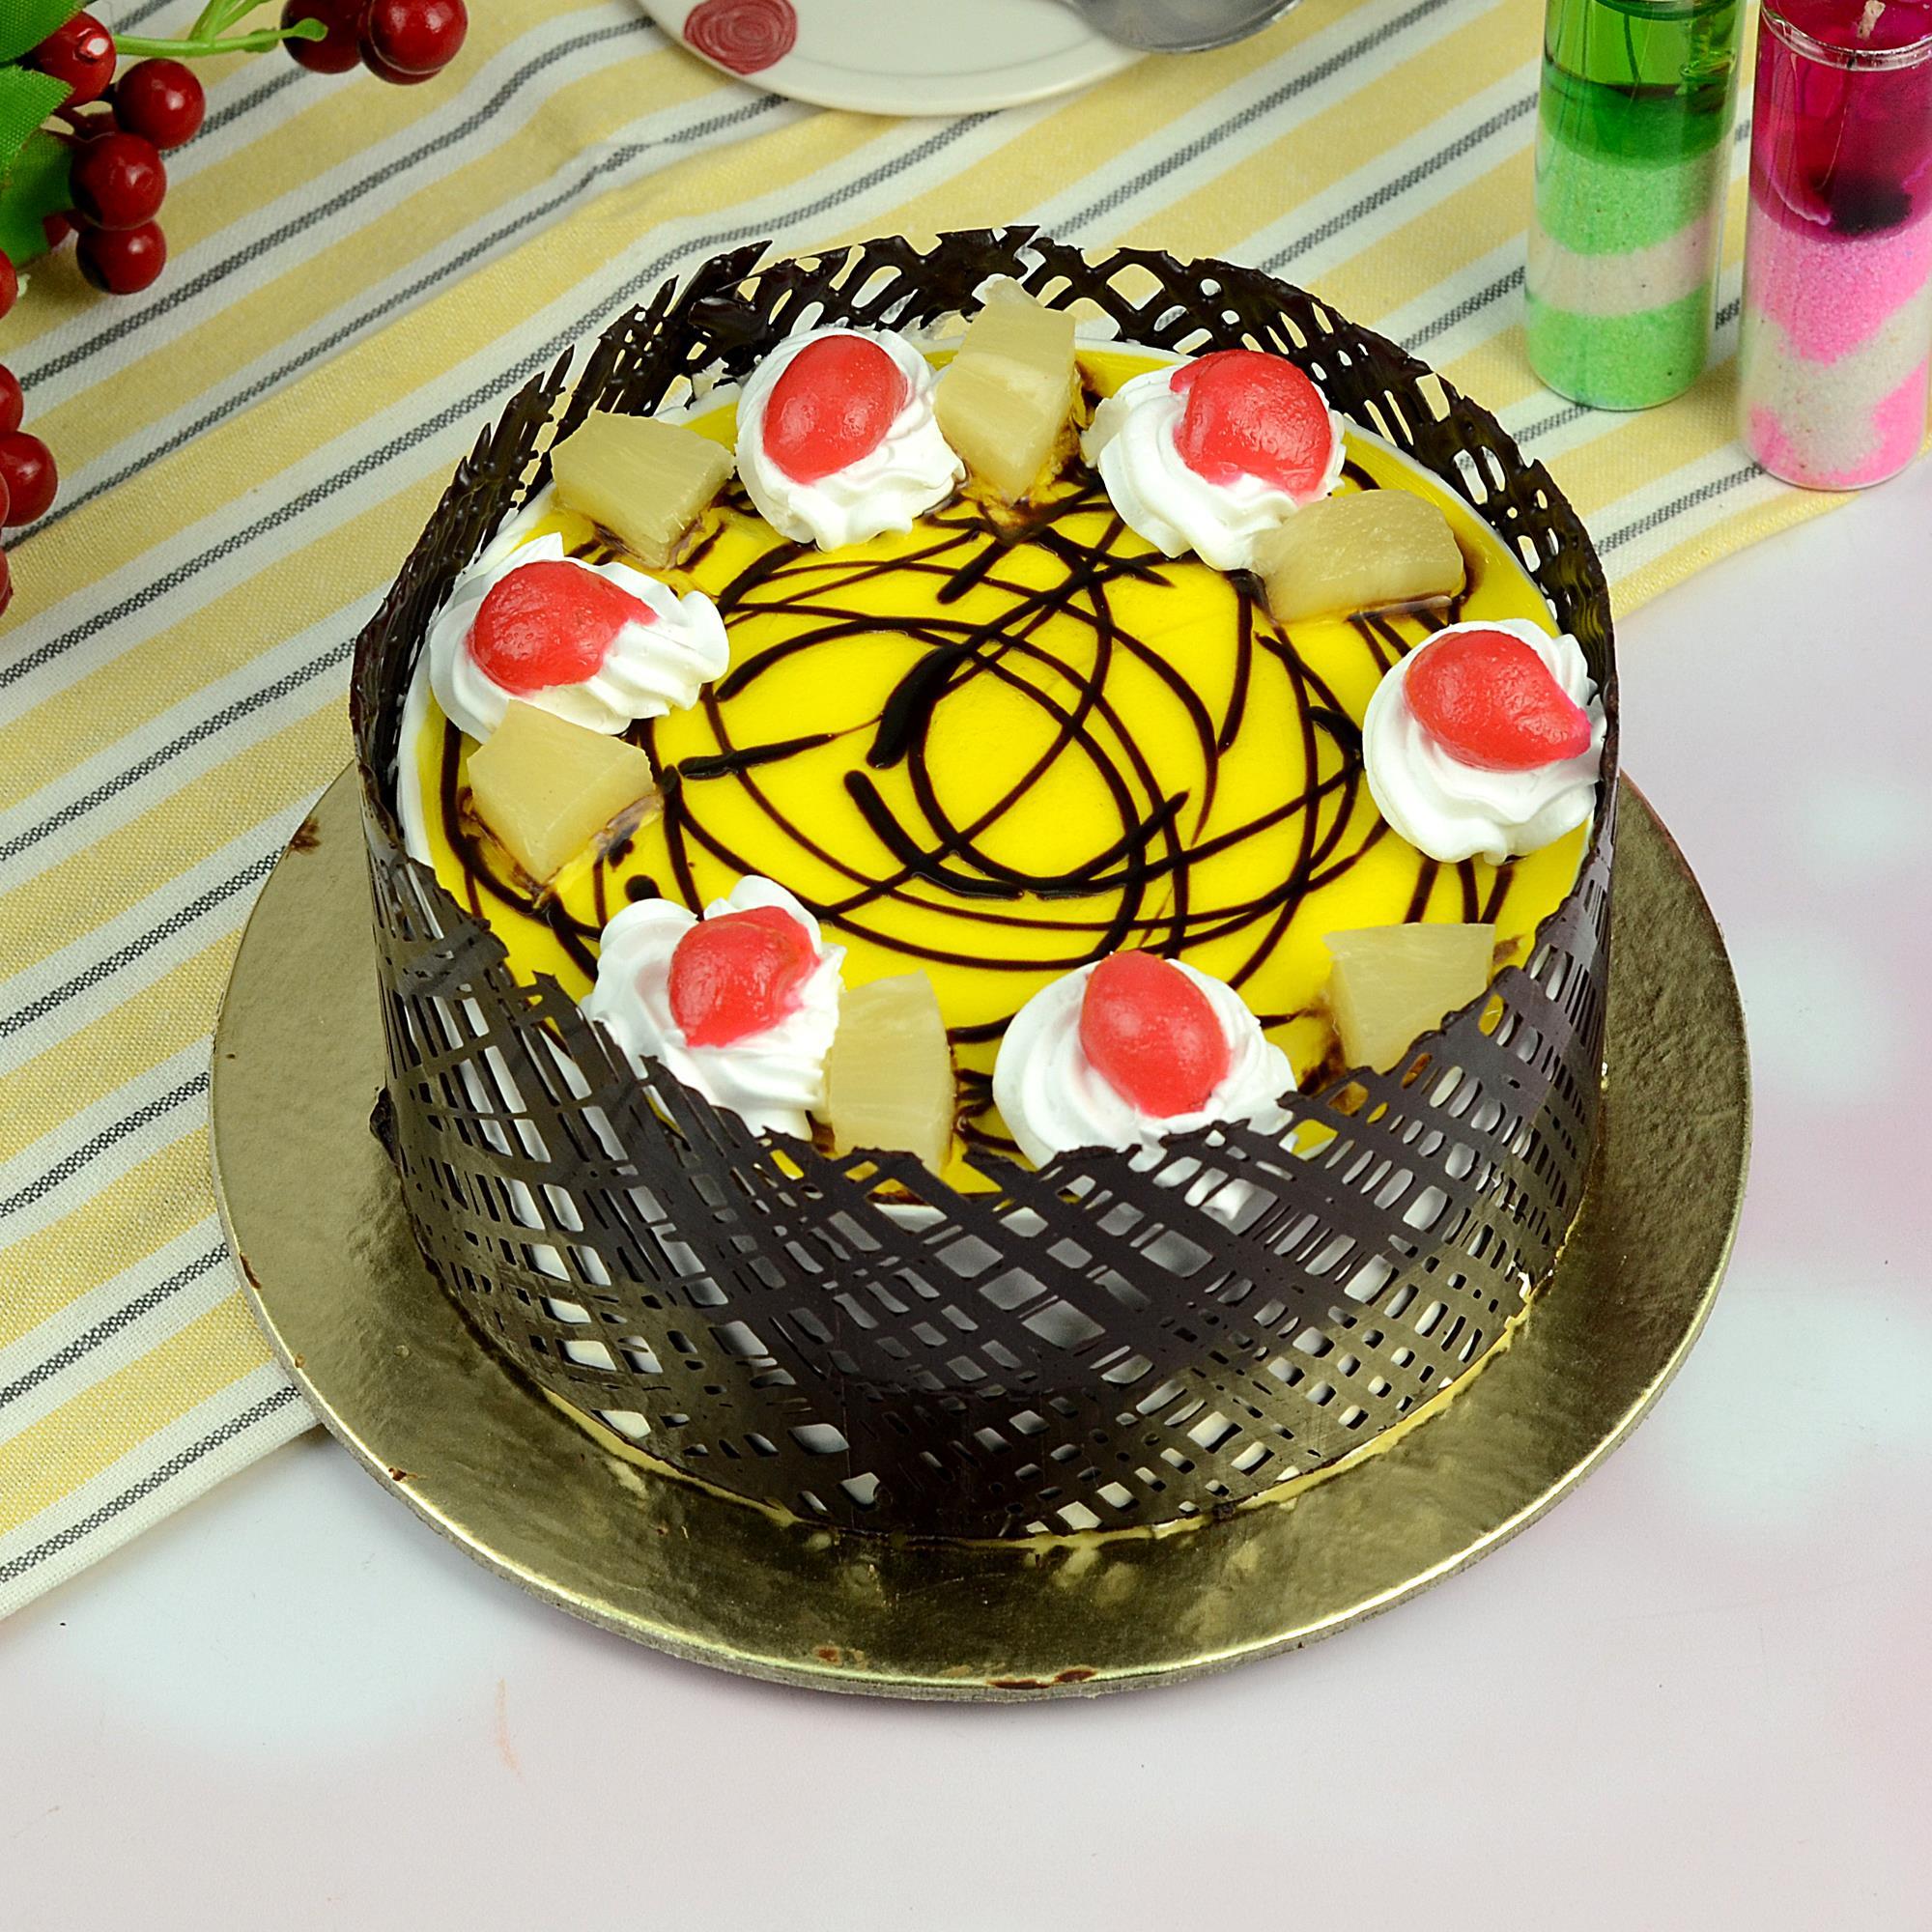 Black Forest Cake Day Vector Illustration Stock Vector - Illustration of  holiday, celebration: 204142683